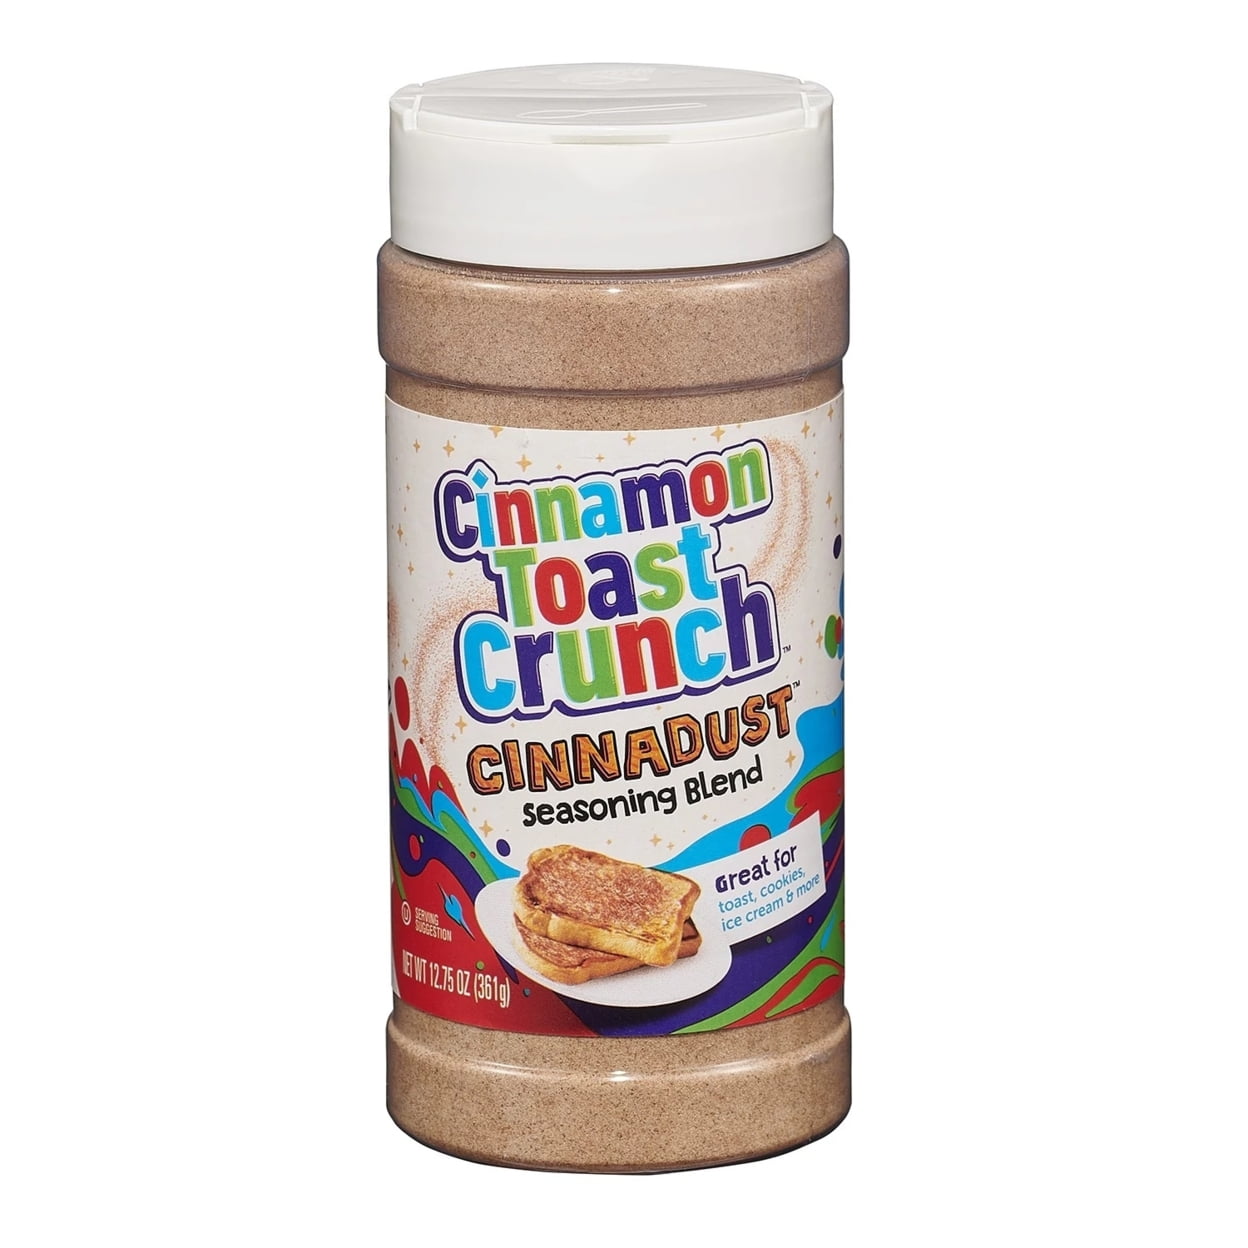 New! Twix Shakers Seasoning Blend vs. Cinnamon Toast Crunch Cinnadust 